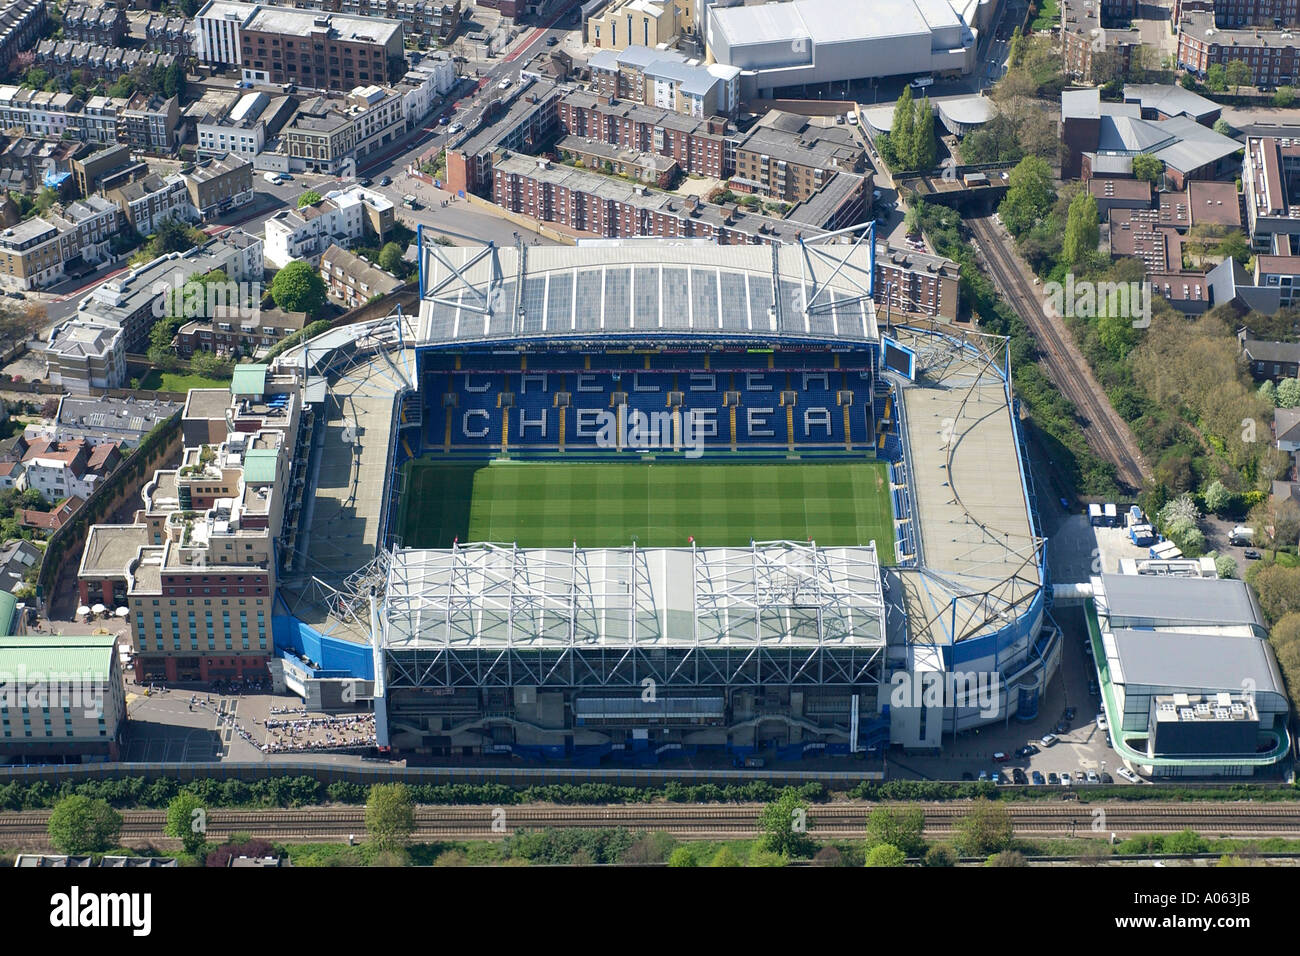 Stamford bridge football ground hi-res stock photography and